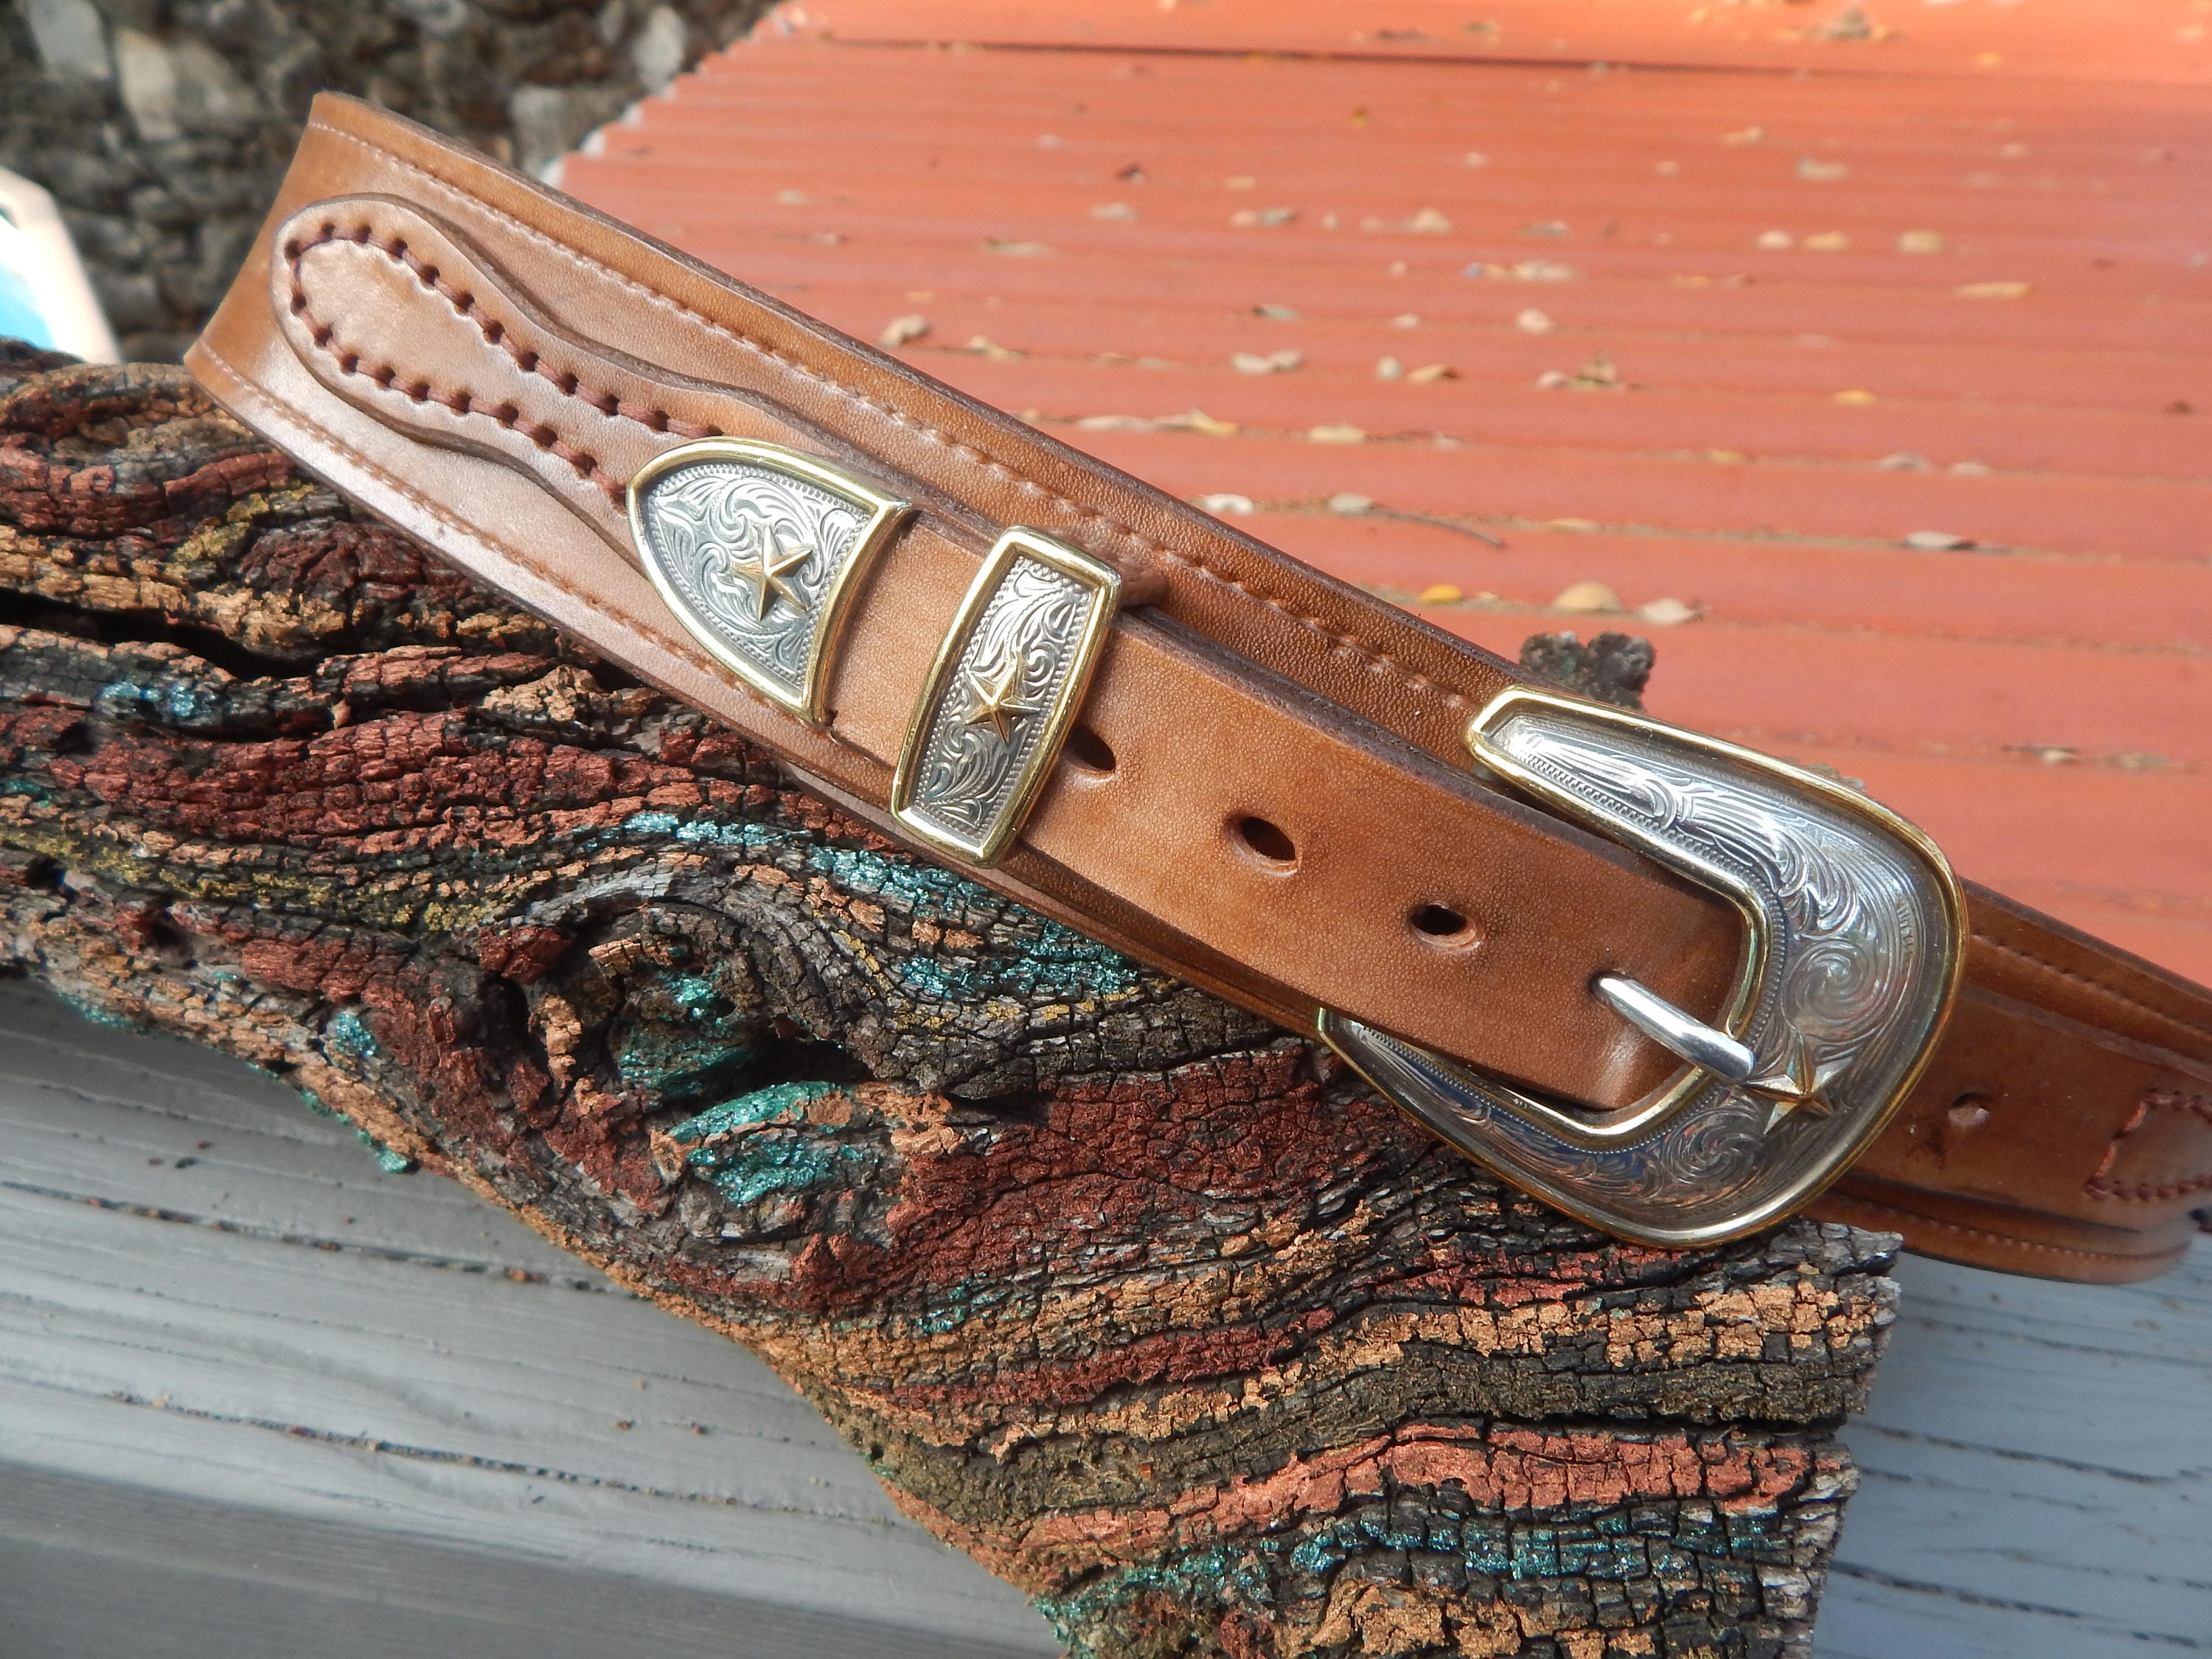 Hand Made Embossed English Bridle Leather Ranger Belt Western Buckle Set